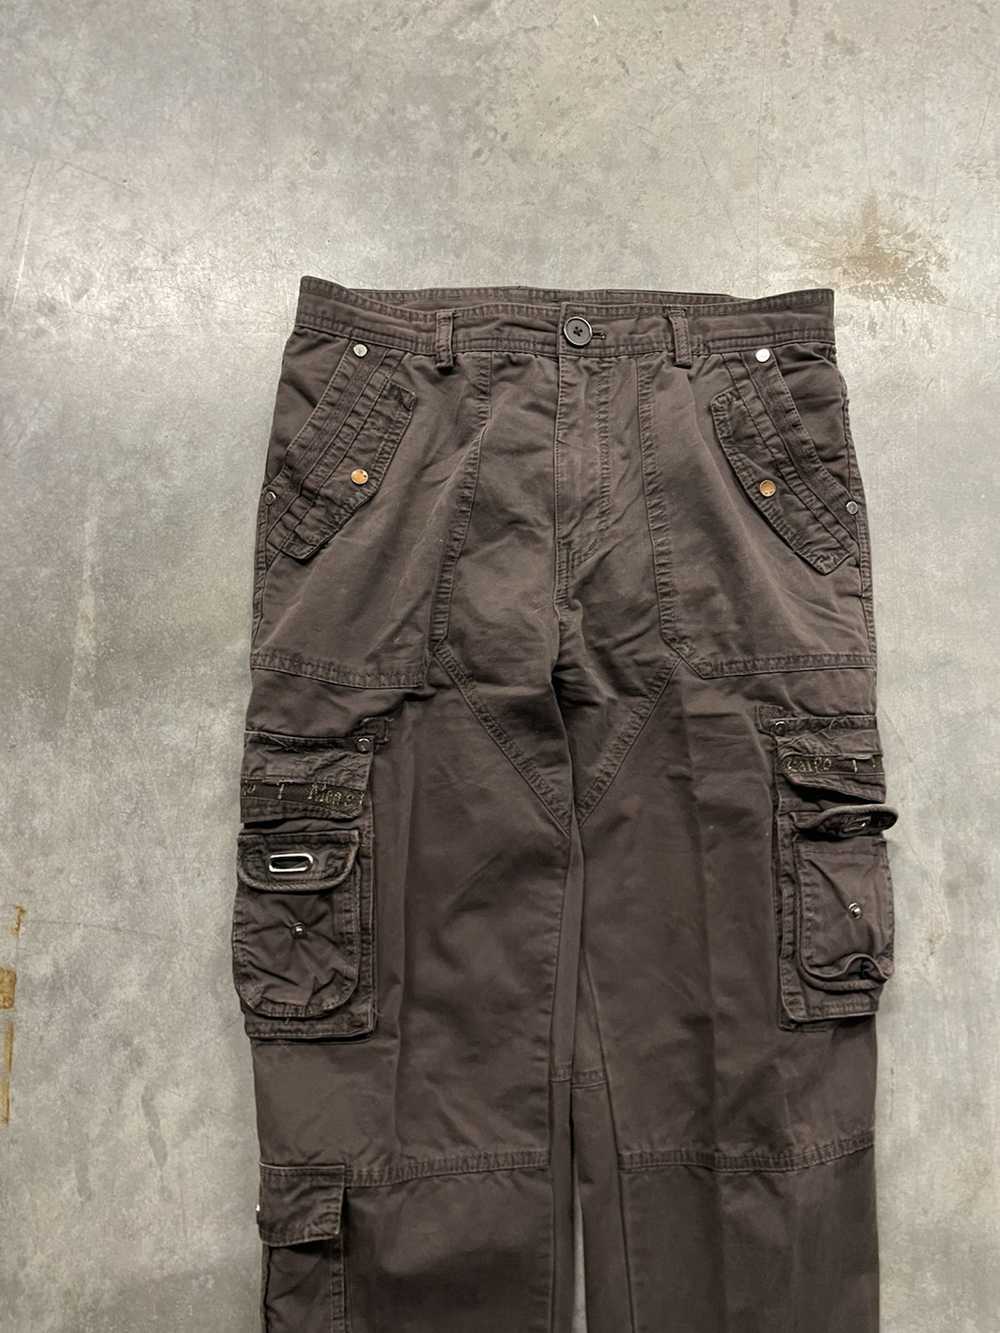 Vintage Vintage Y2K Tactical Cargo Pants (32x31) - image 2